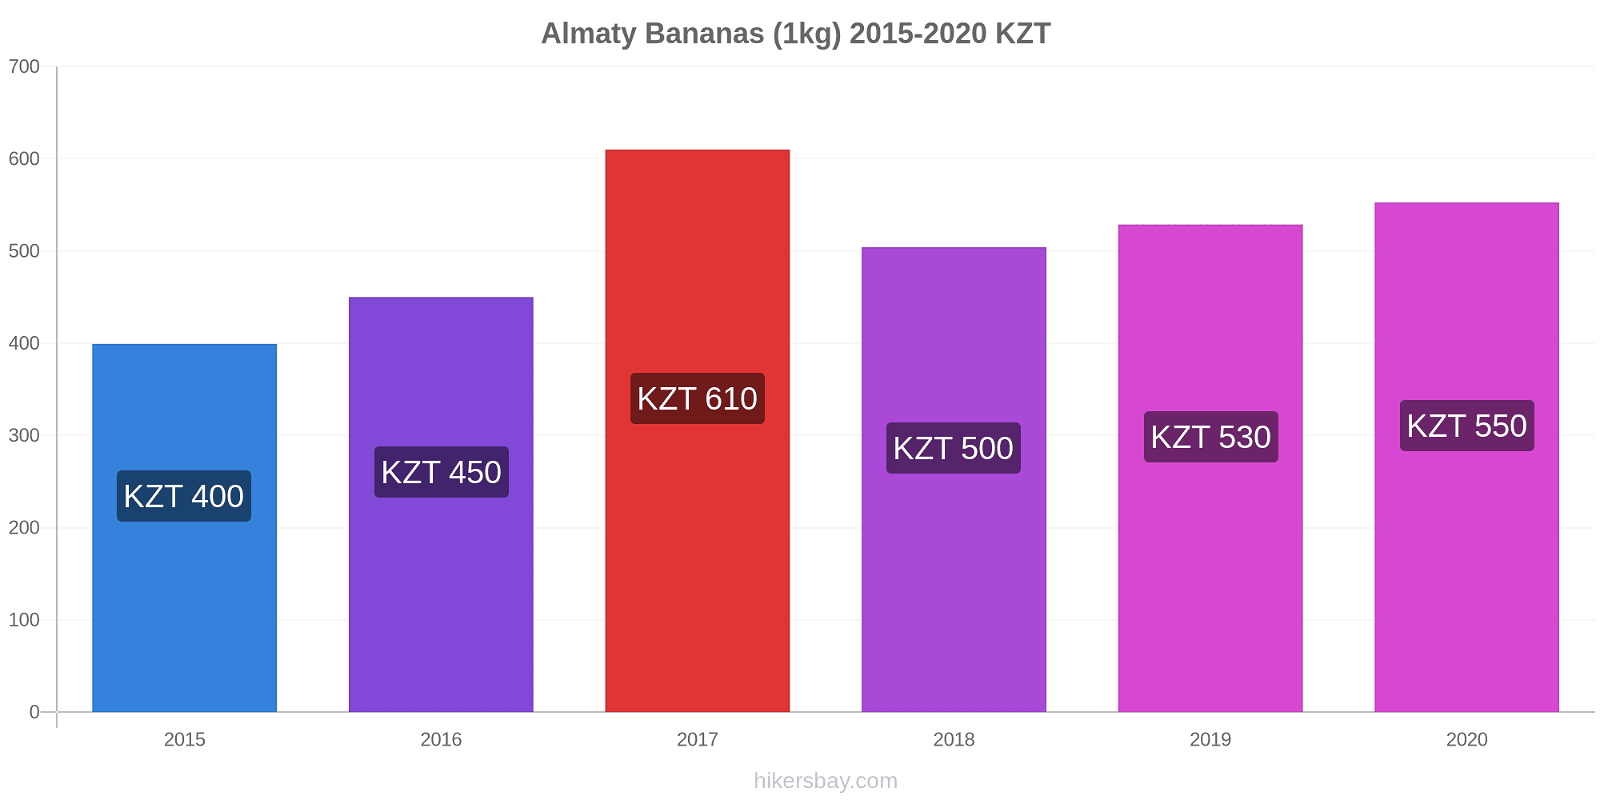 Almaty price changes Bananas (1kg) hikersbay.com